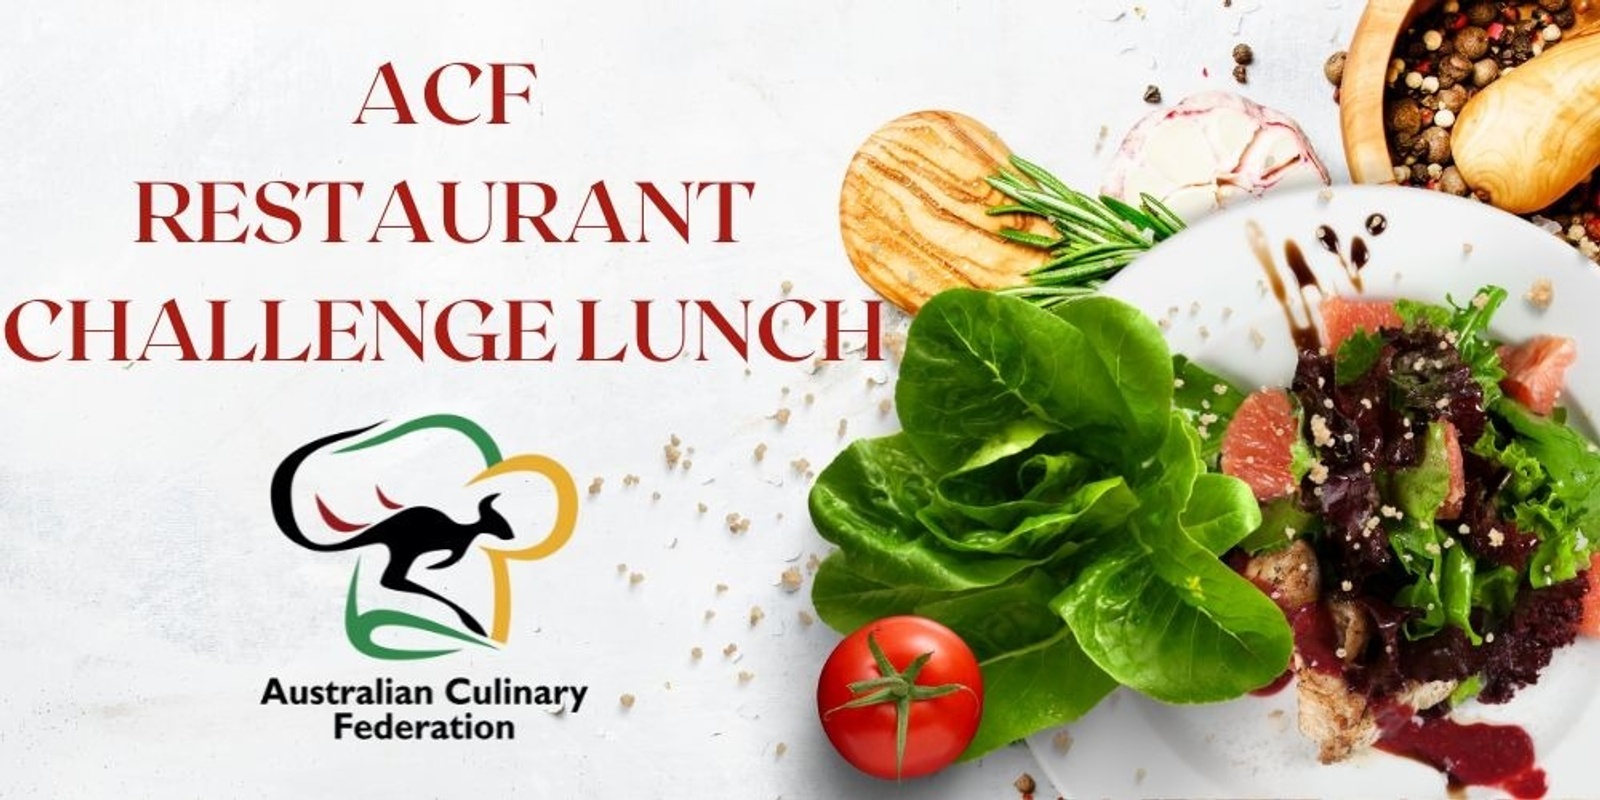 Banner image for ACF Restaurant Challenge Lunch